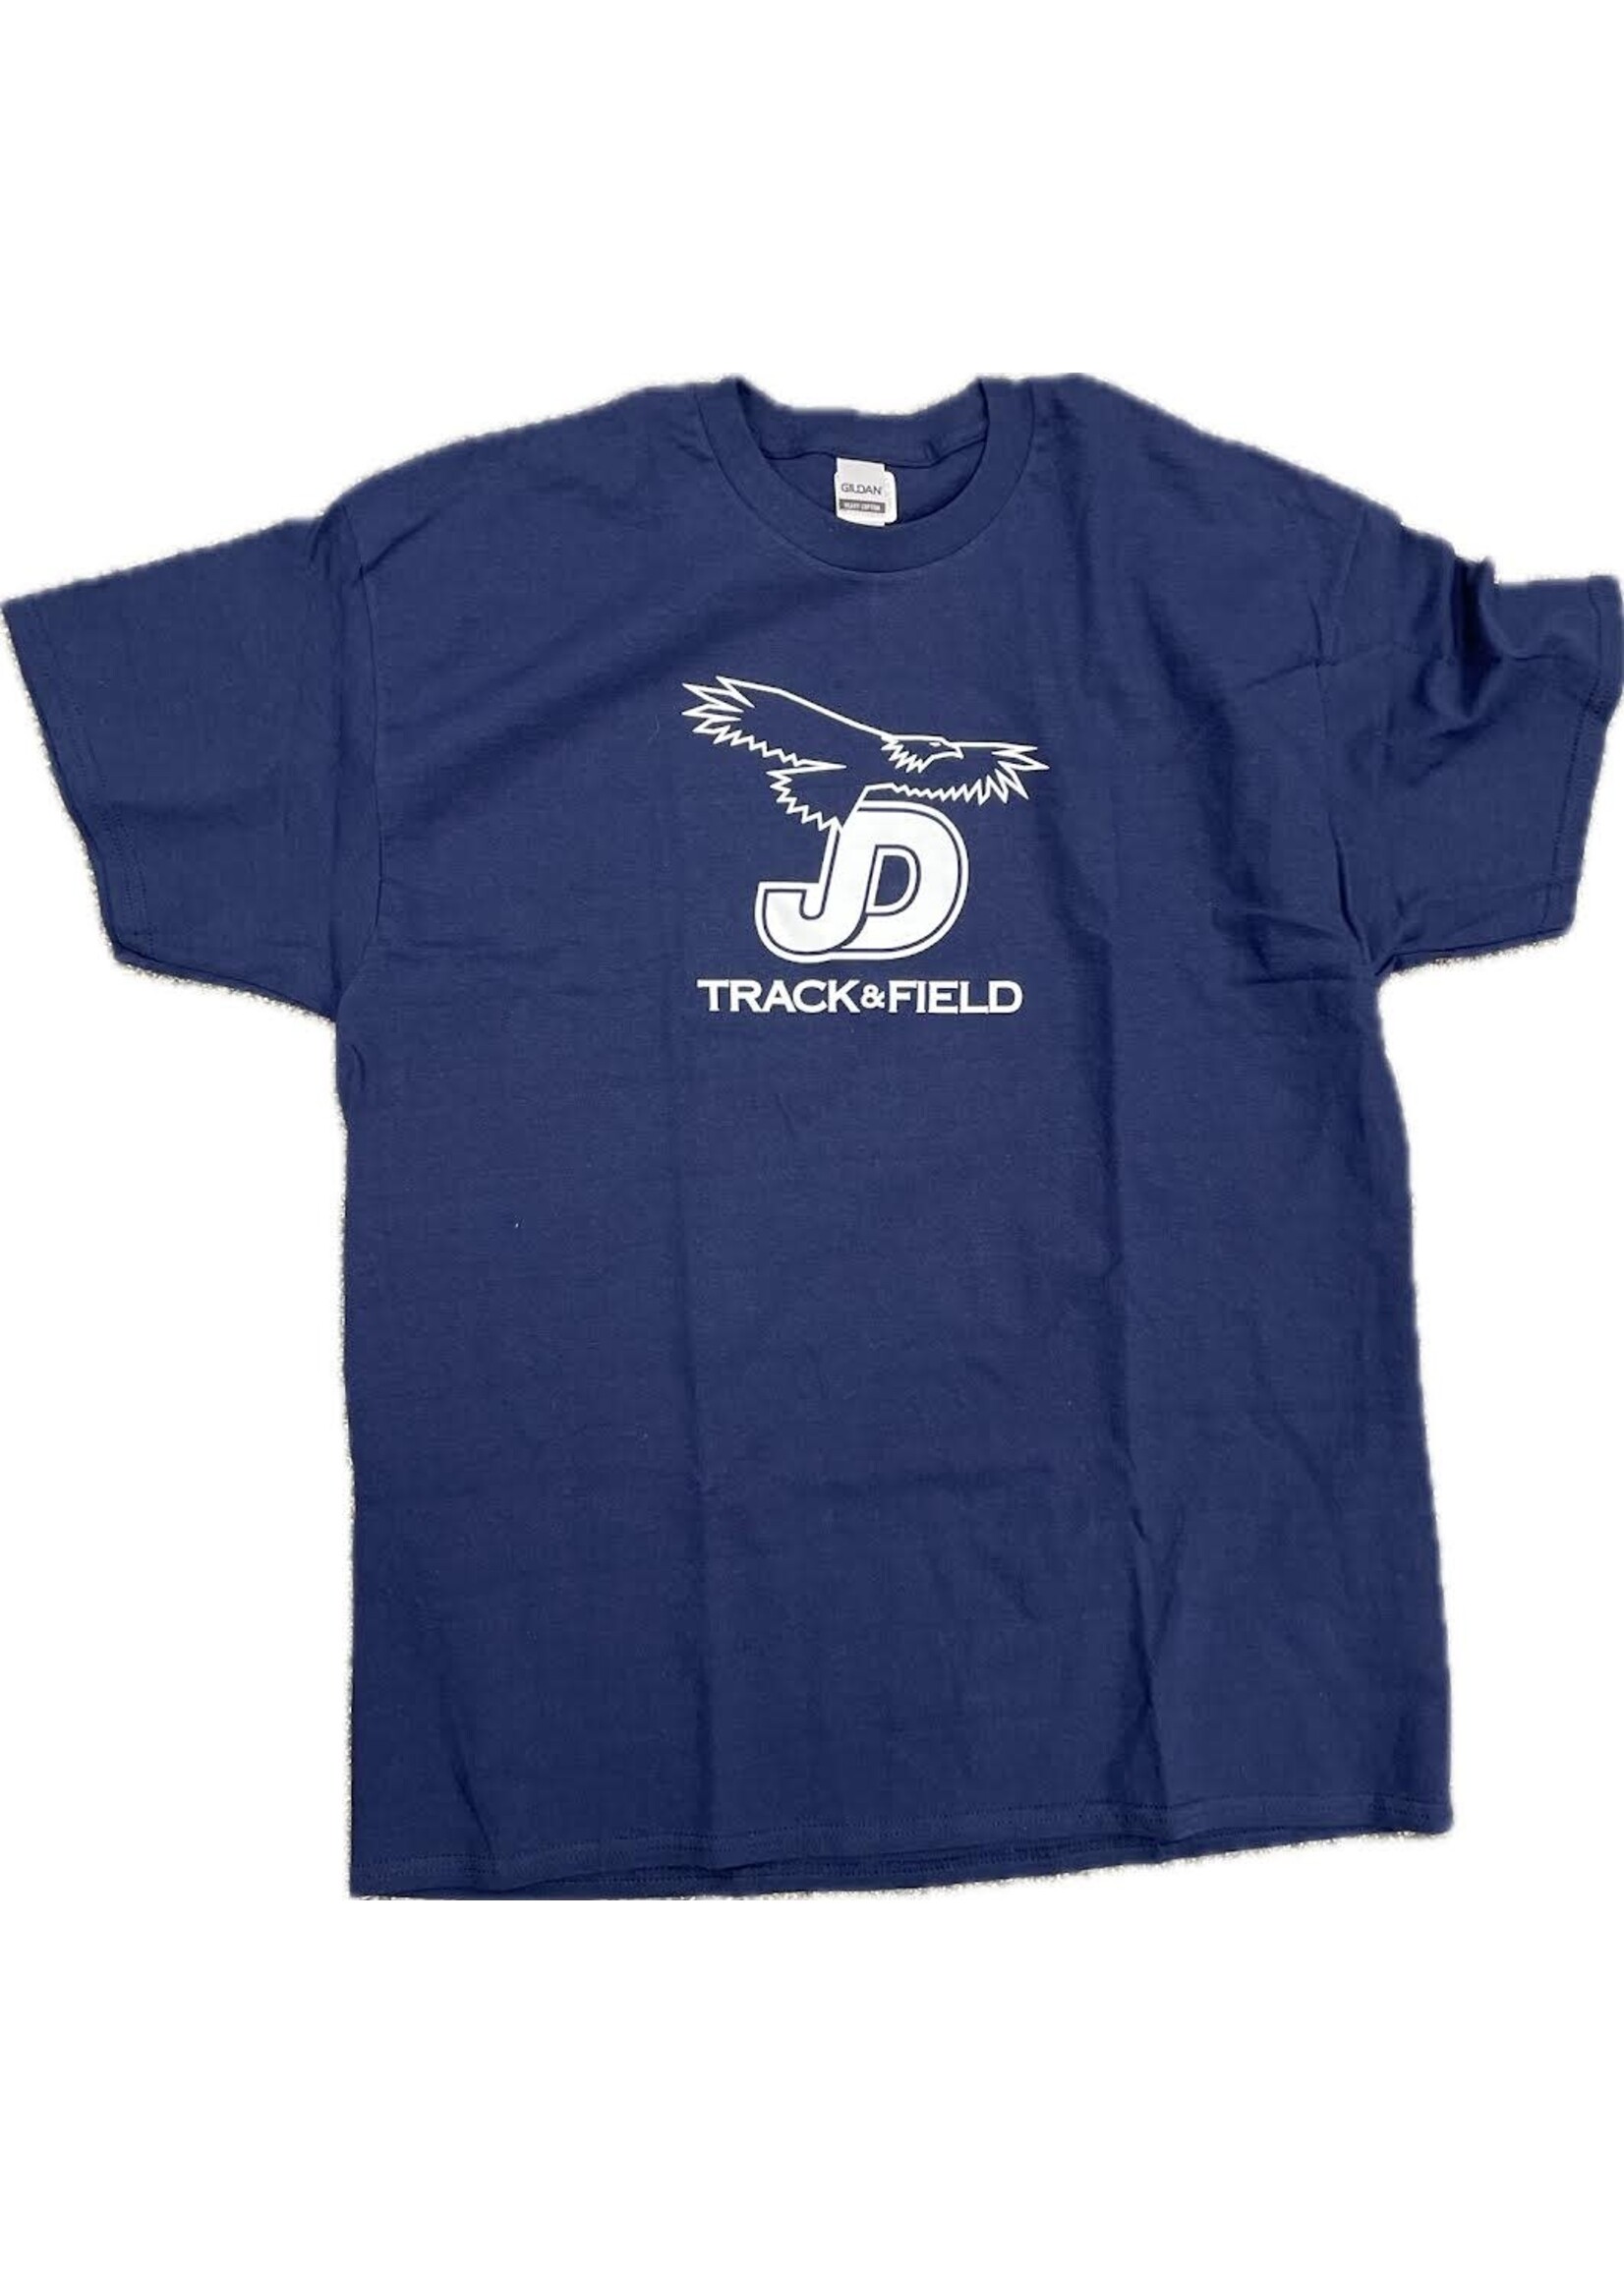 NON-UNIFORM JD W/ Eagle Track & Field Spirit Shirt